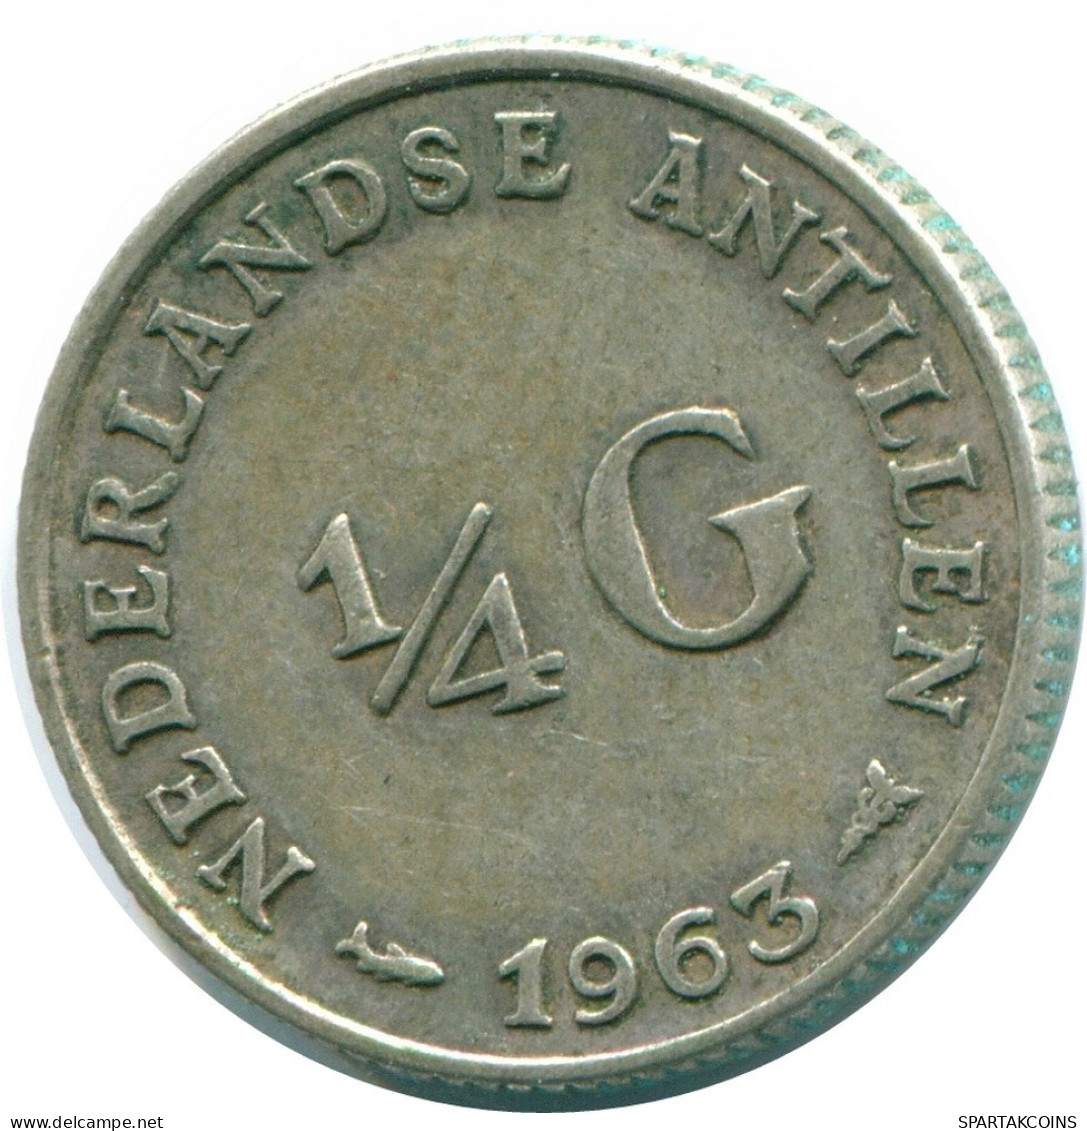 1/4 GULDEN 1963 NETHERLANDS ANTILLES SILVER Colonial Coin #NL11224.4.U.A - Antille Olandesi